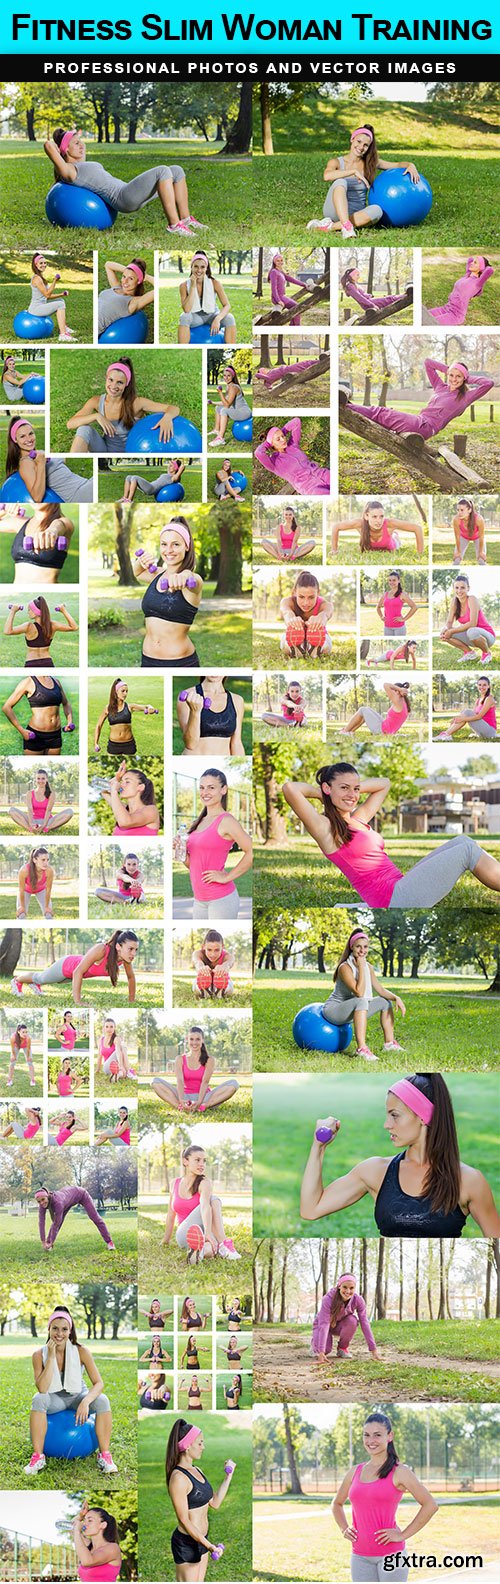 Fitness Slim Woman Training